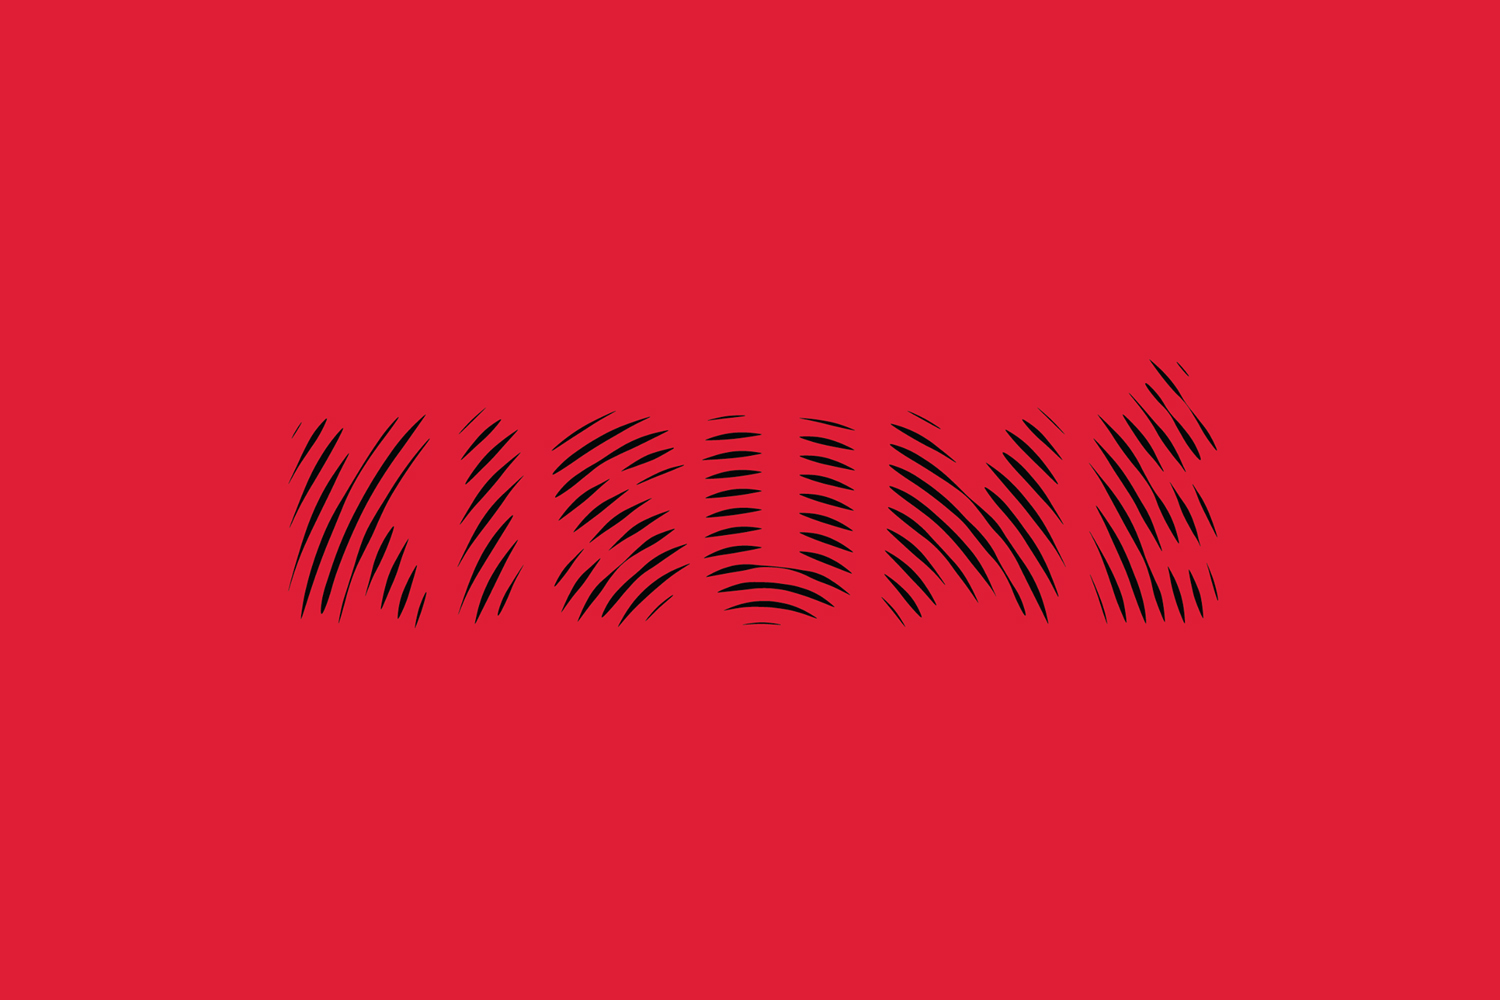 Creative Logotype Gallery & Inspiration: Kisumé by Fabio Ongarato Design, Australia